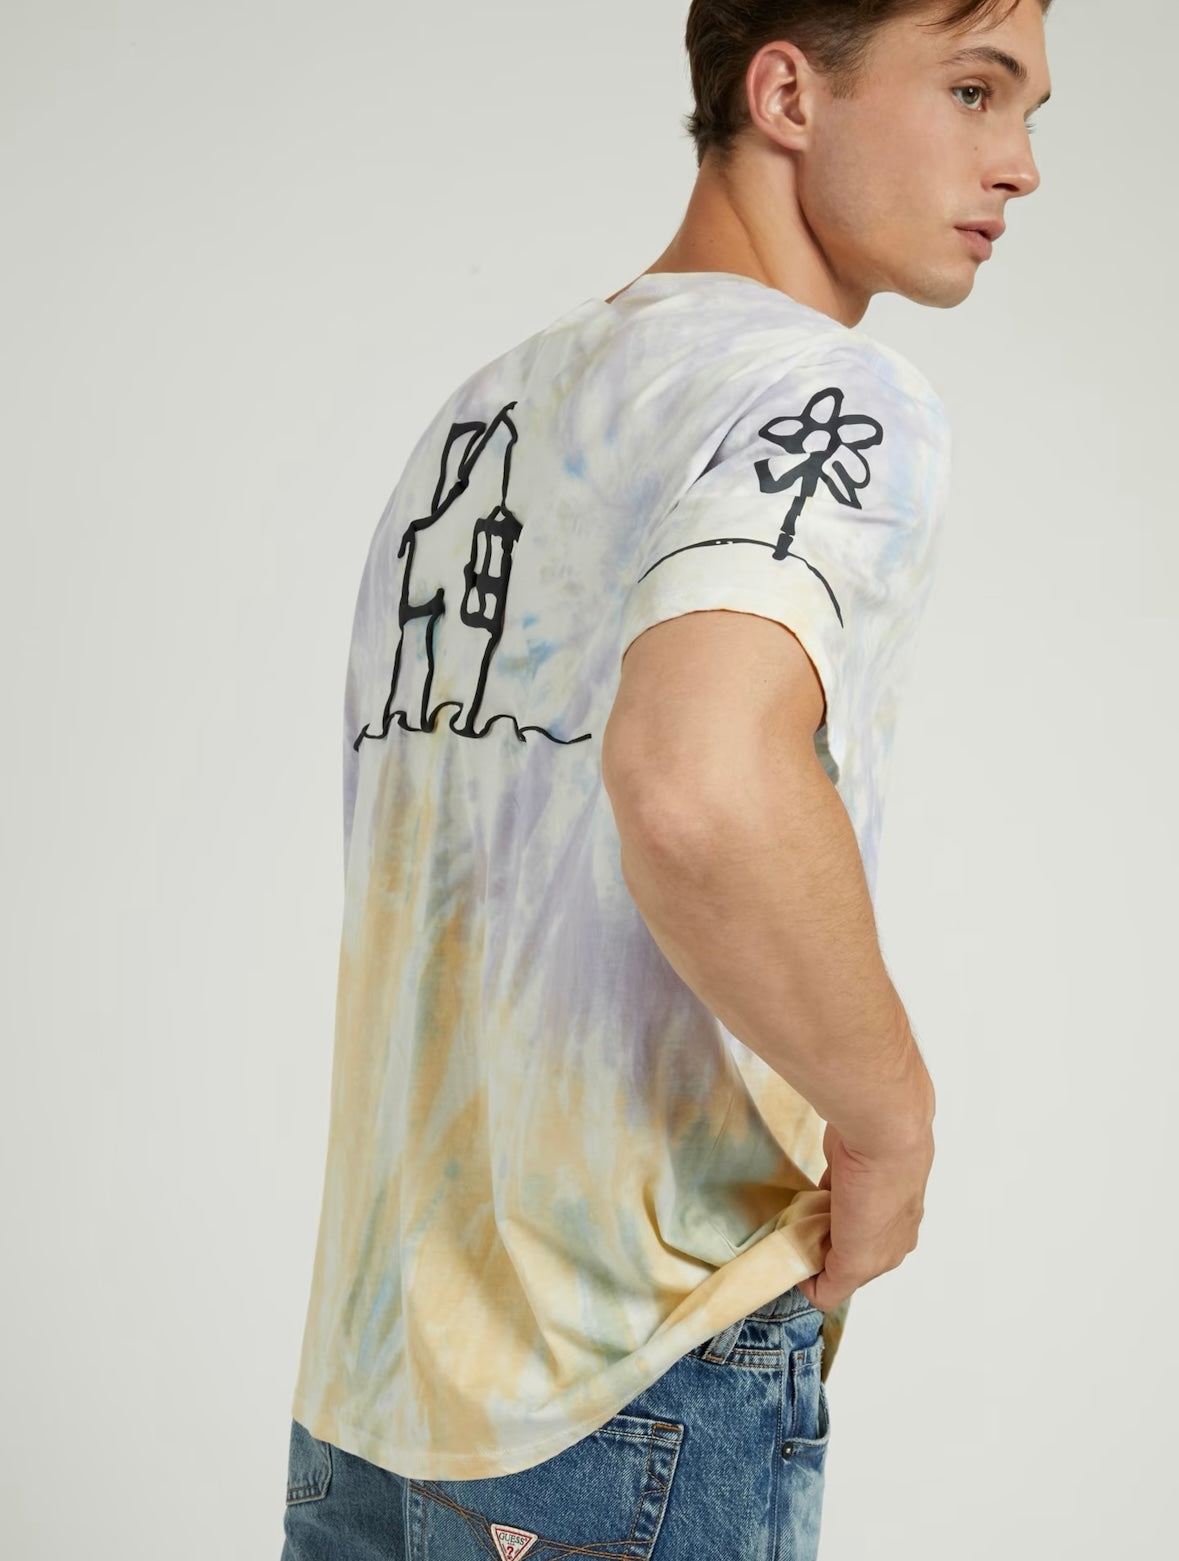 Guess Burning Tire Banksy Graffiti T-Shirt In Tie Dye